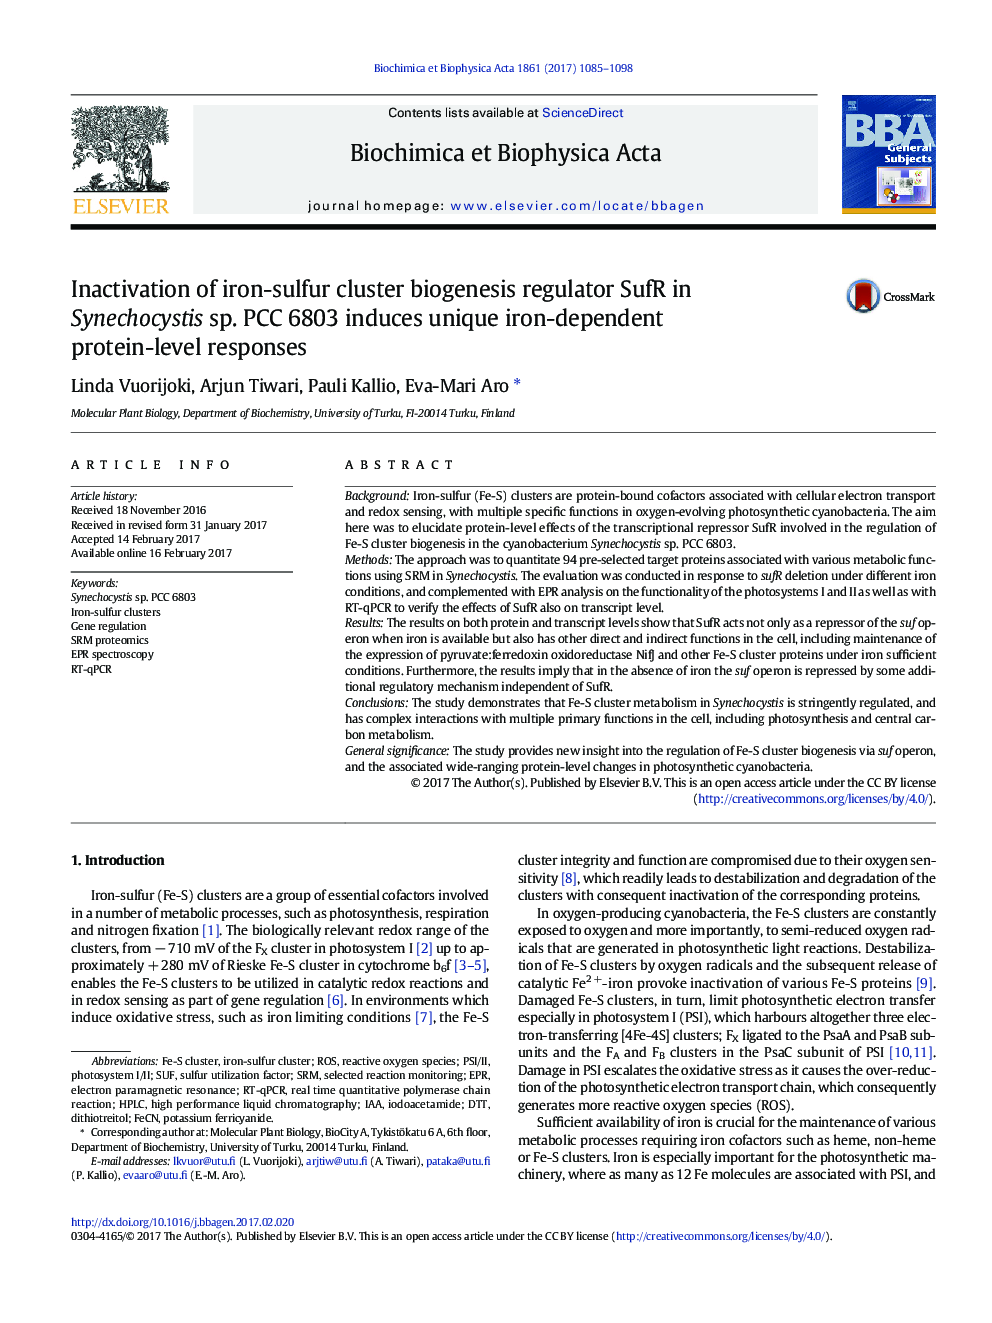 Inactivation of iron-sulfur cluster biogenesis regulator SufR in Synechocystis sp. PCC 6803 induces unique iron-dependent protein-level responses